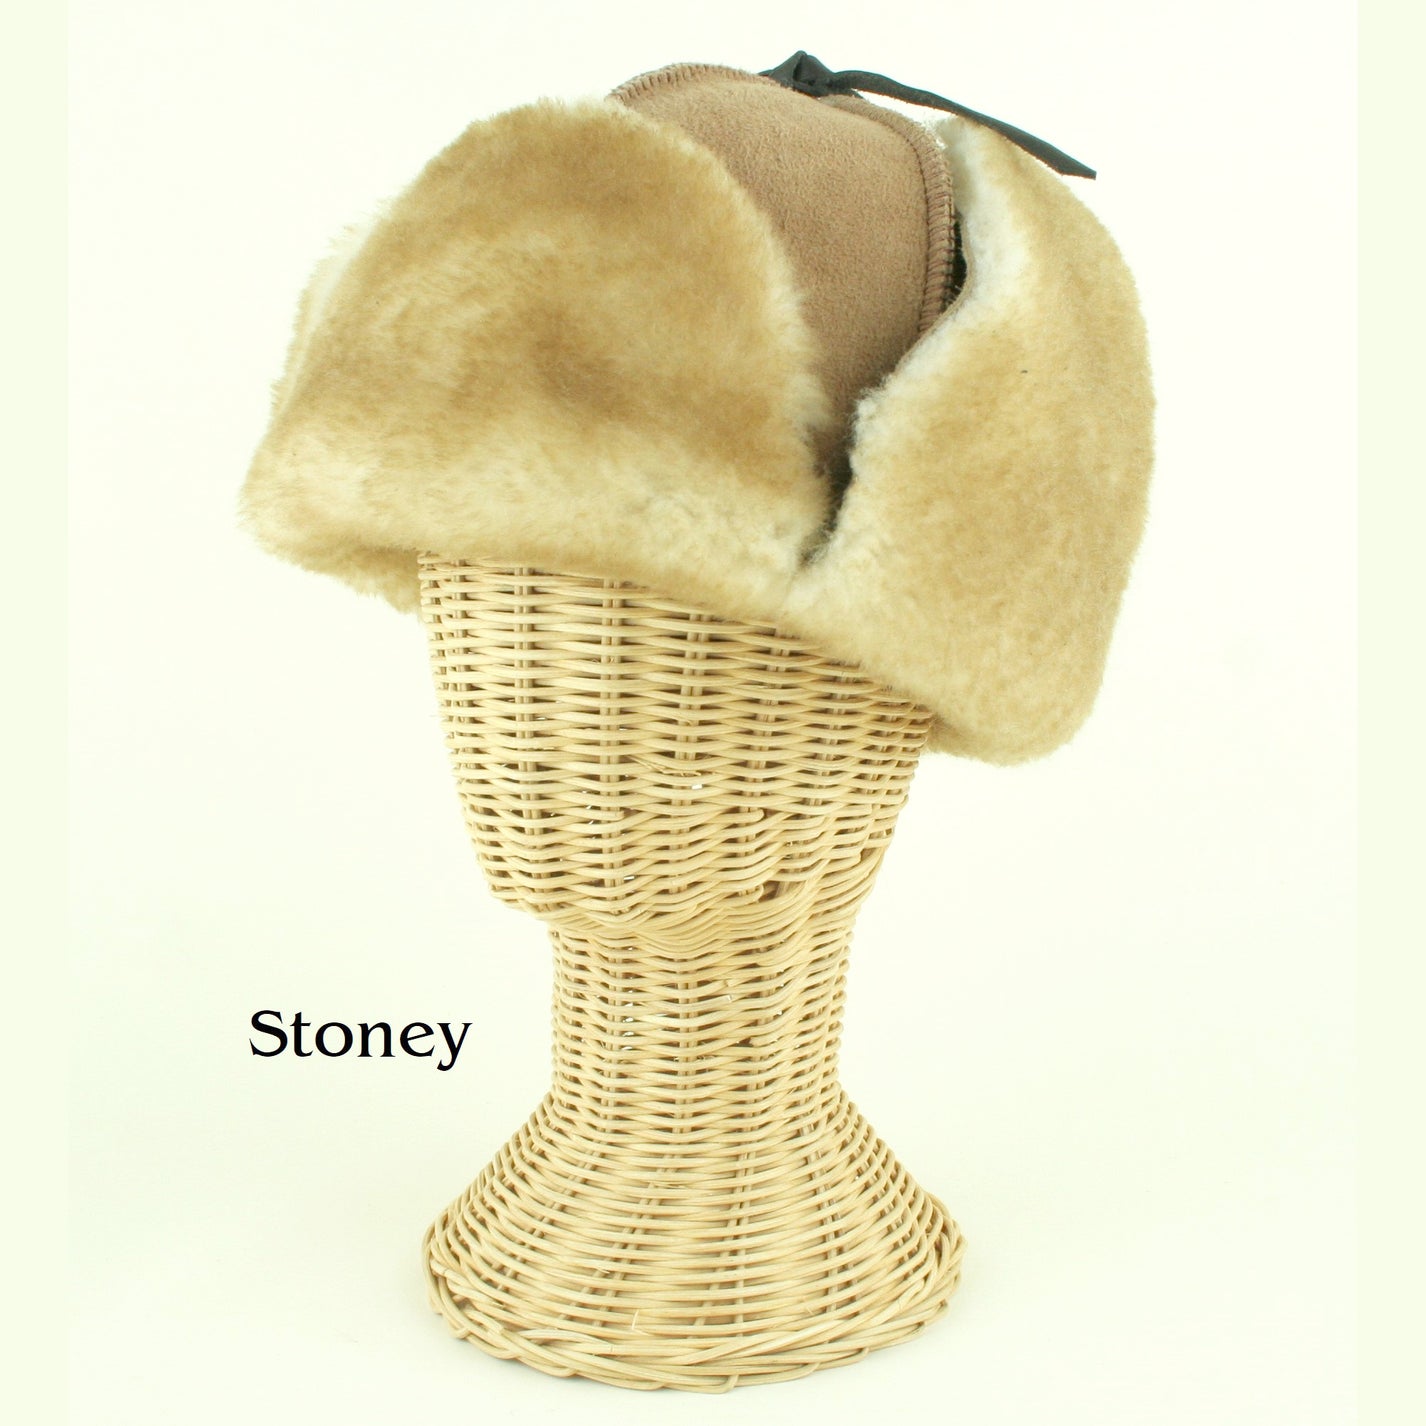 Product Details | Kodiak Sheepskin Hat | The Leather Works